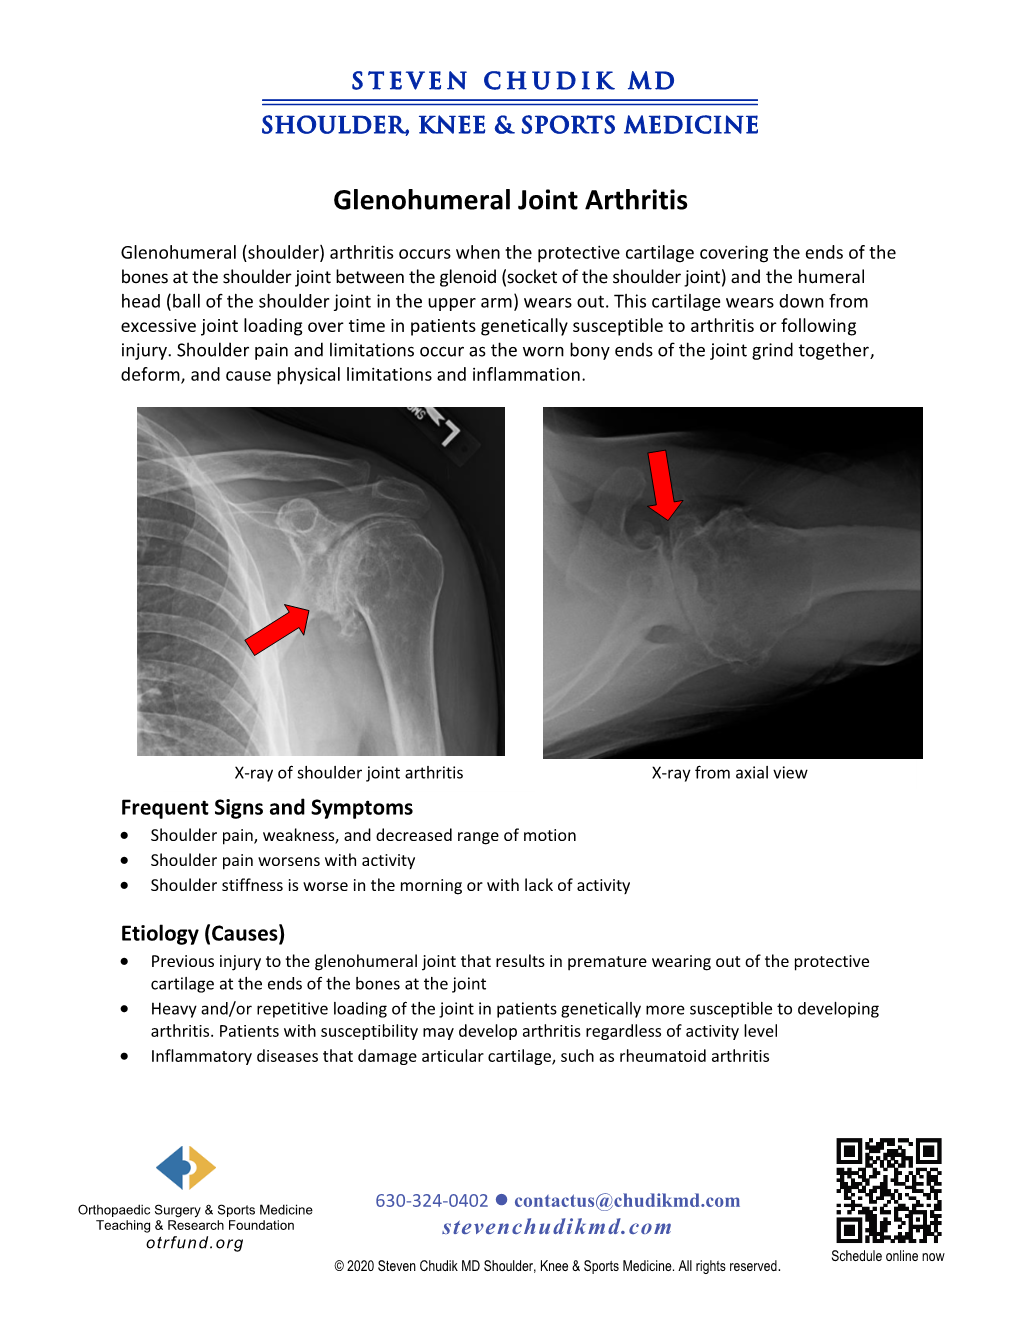 Glenohumeral Shoulder Joint Arthritis